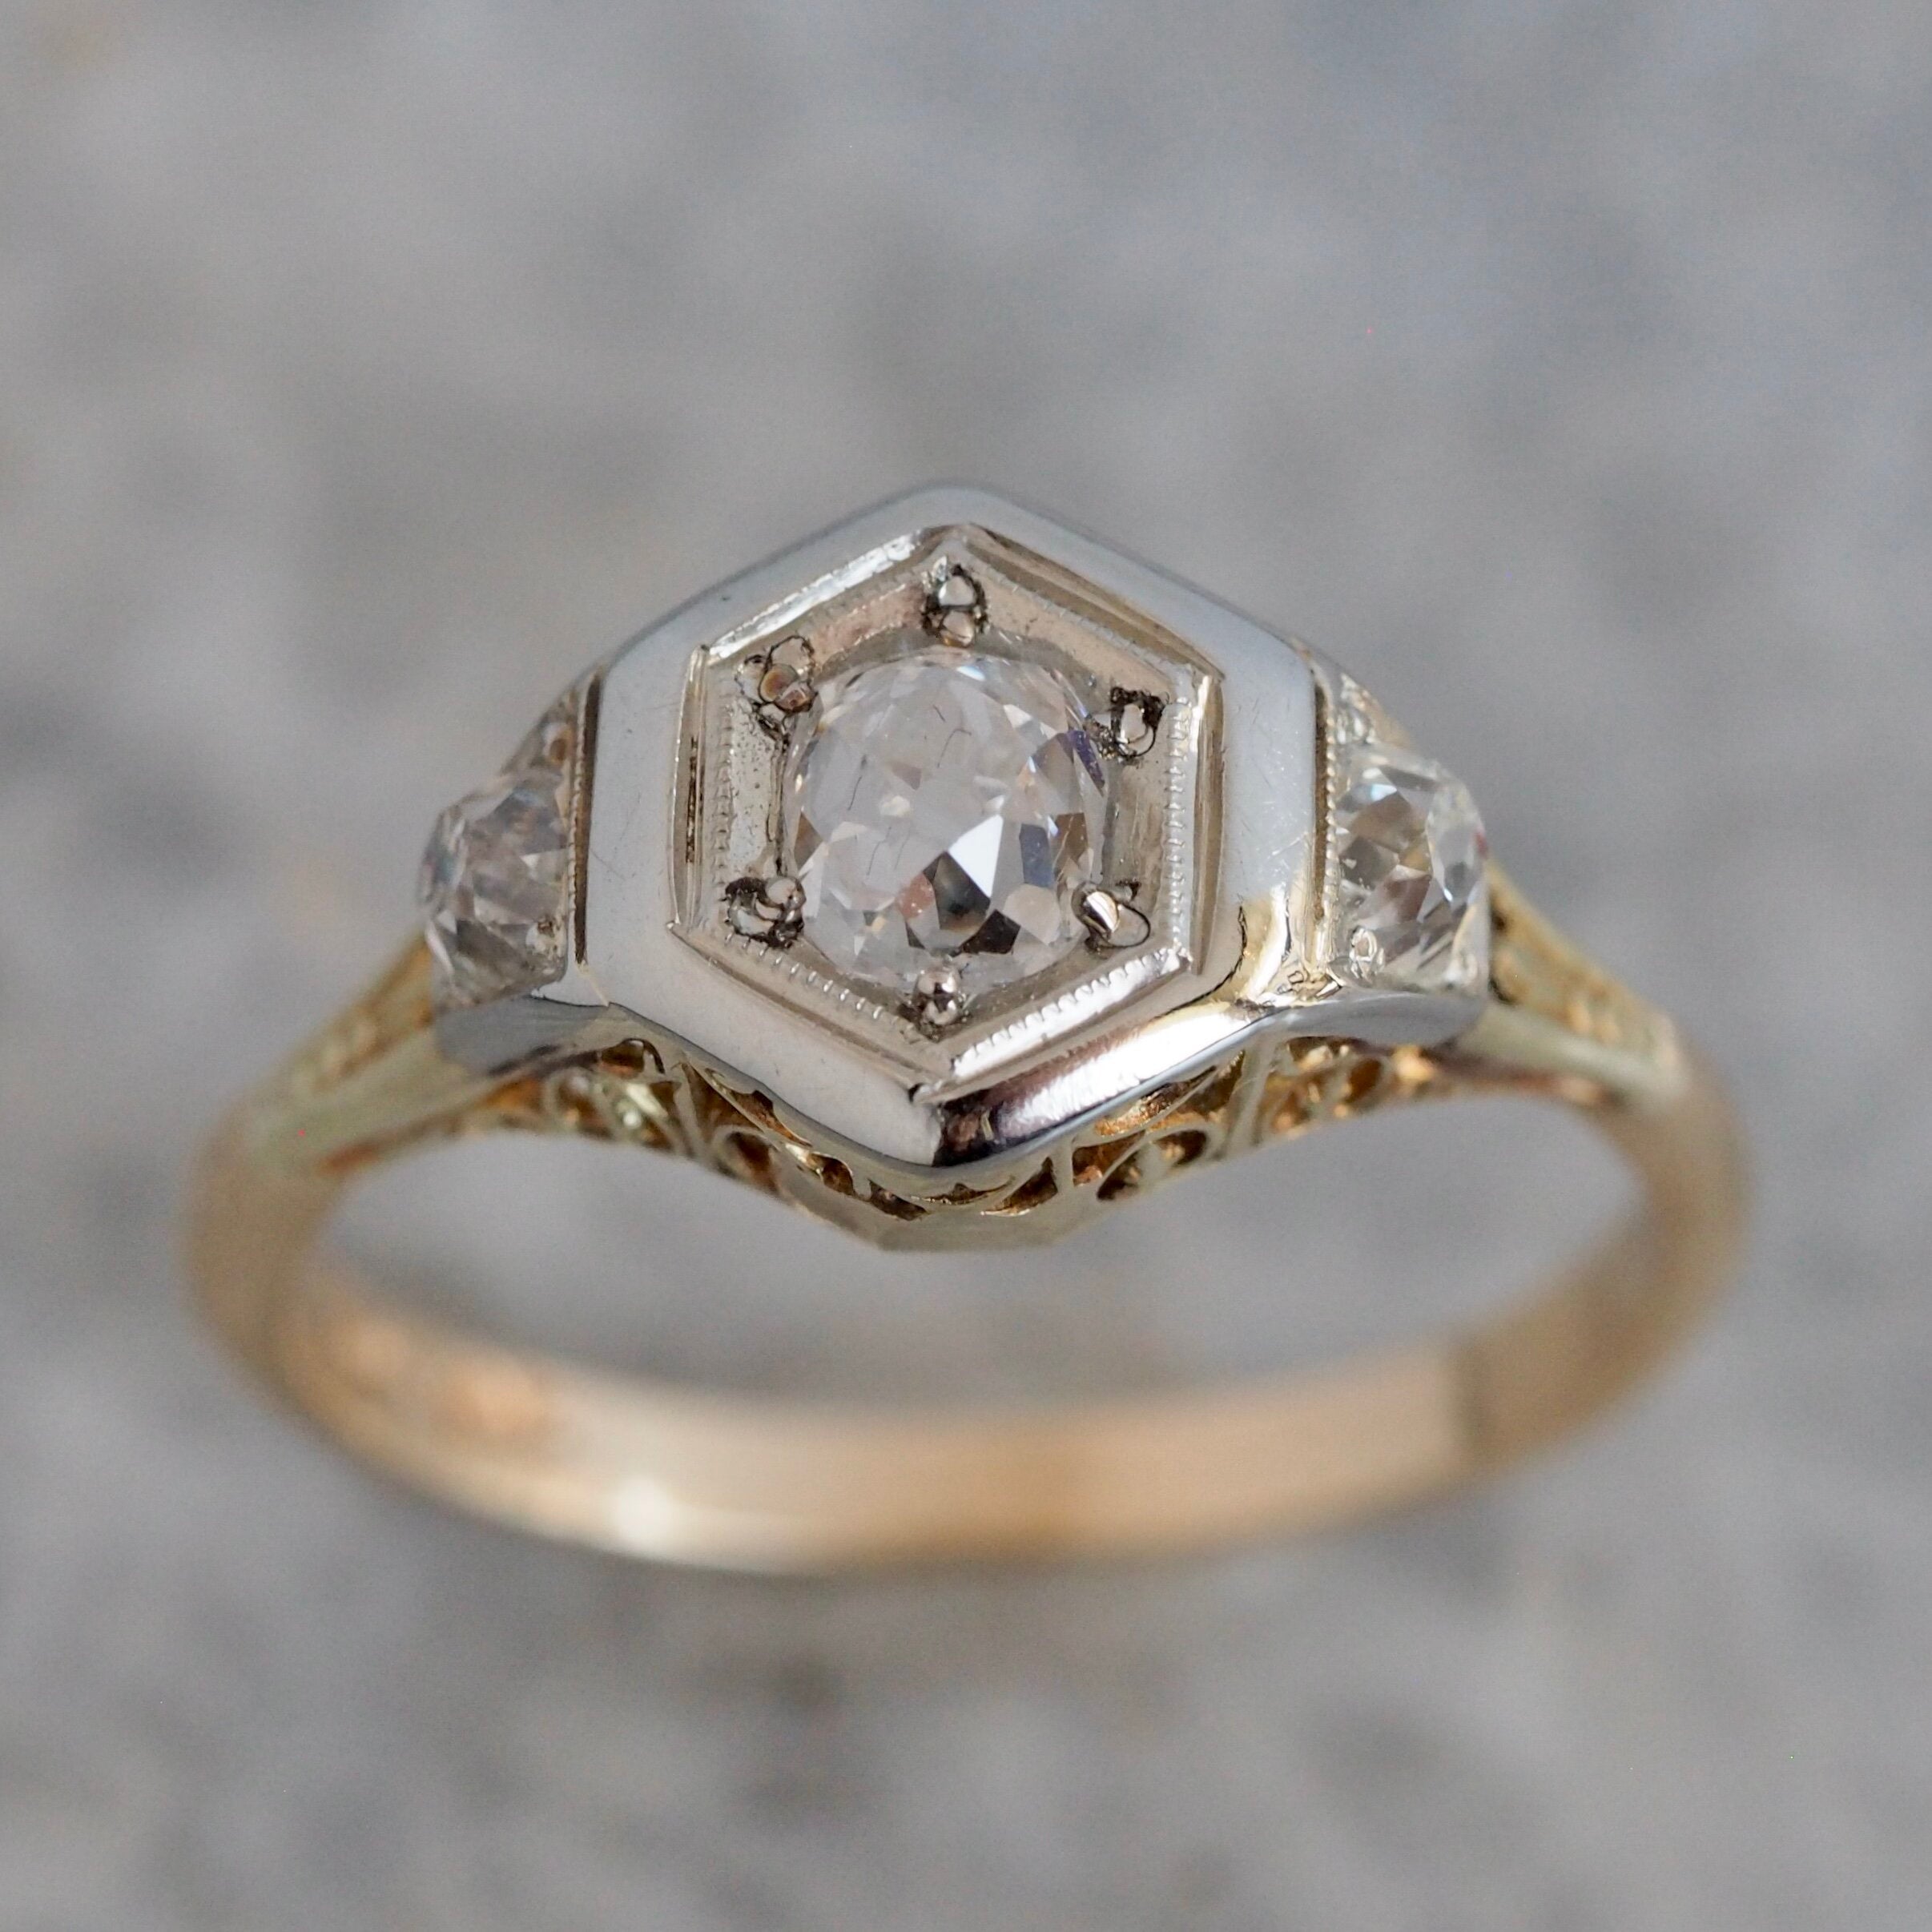 Antique Art Deco 14k Gold Old Mine Cut Diamond Ring